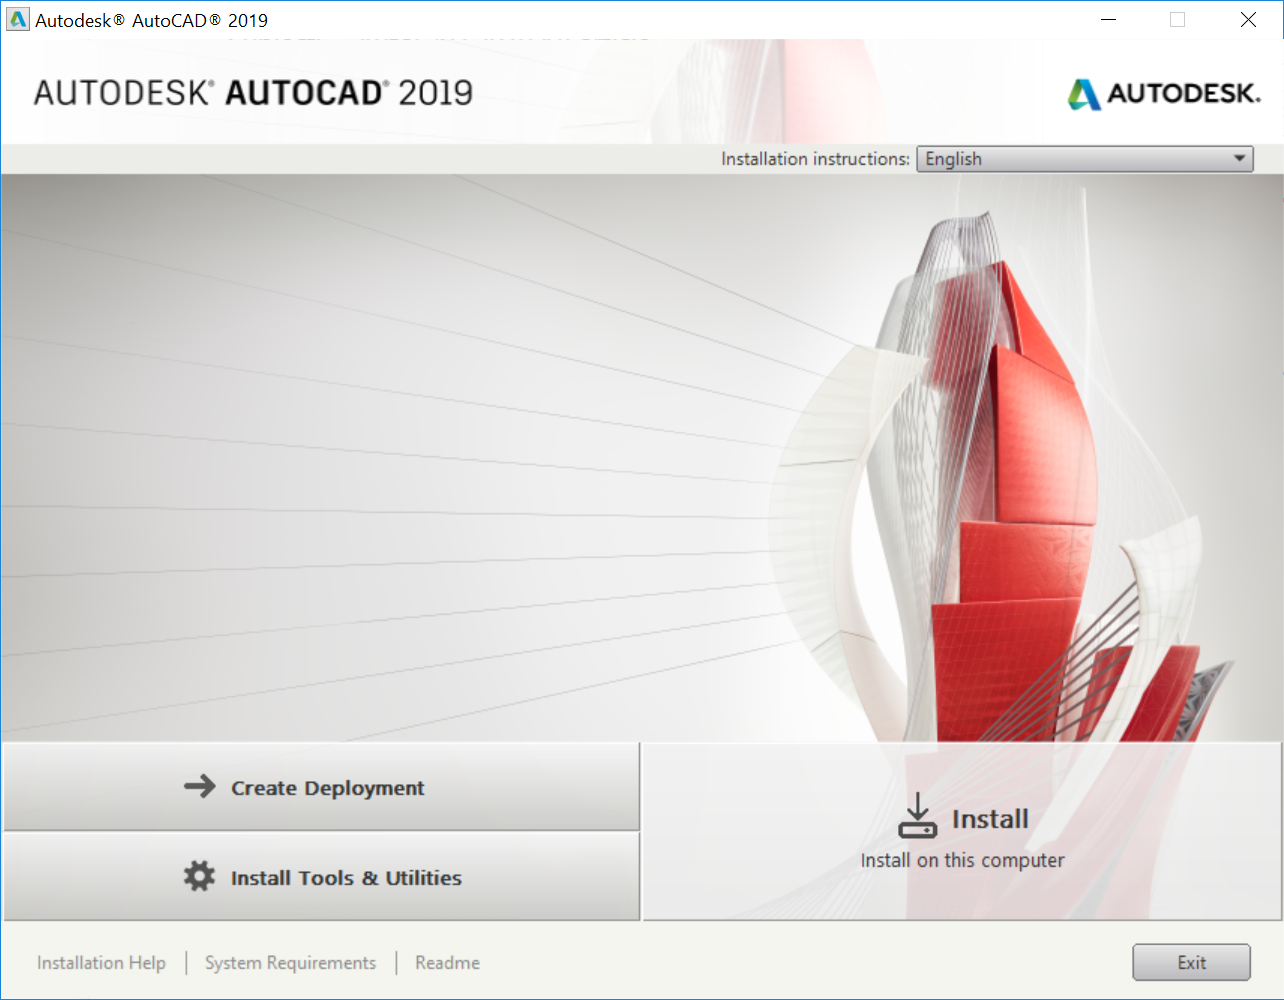 Autodesk Autocad 2019 Applications